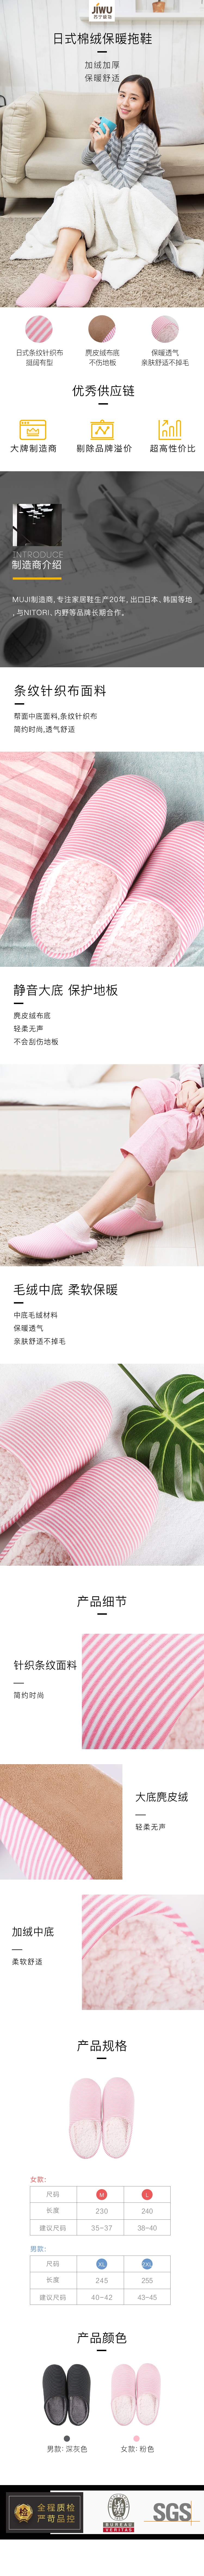 Women's Fleece Lined Pink Striped House Slippers Size L